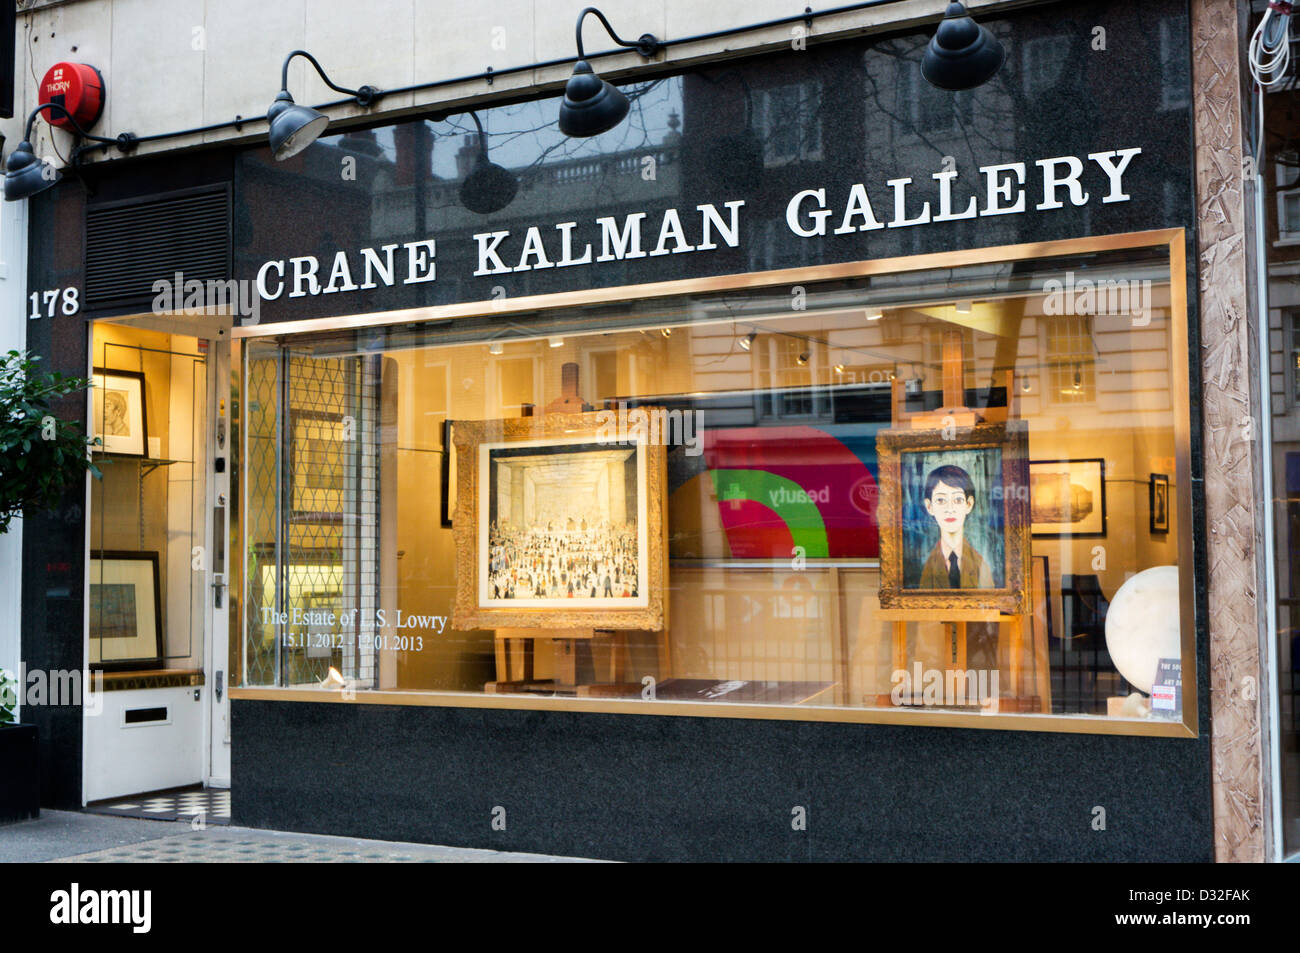 Crane Kalman Gallery in Brompton Road, Knightsbridge, London. Stock Photo